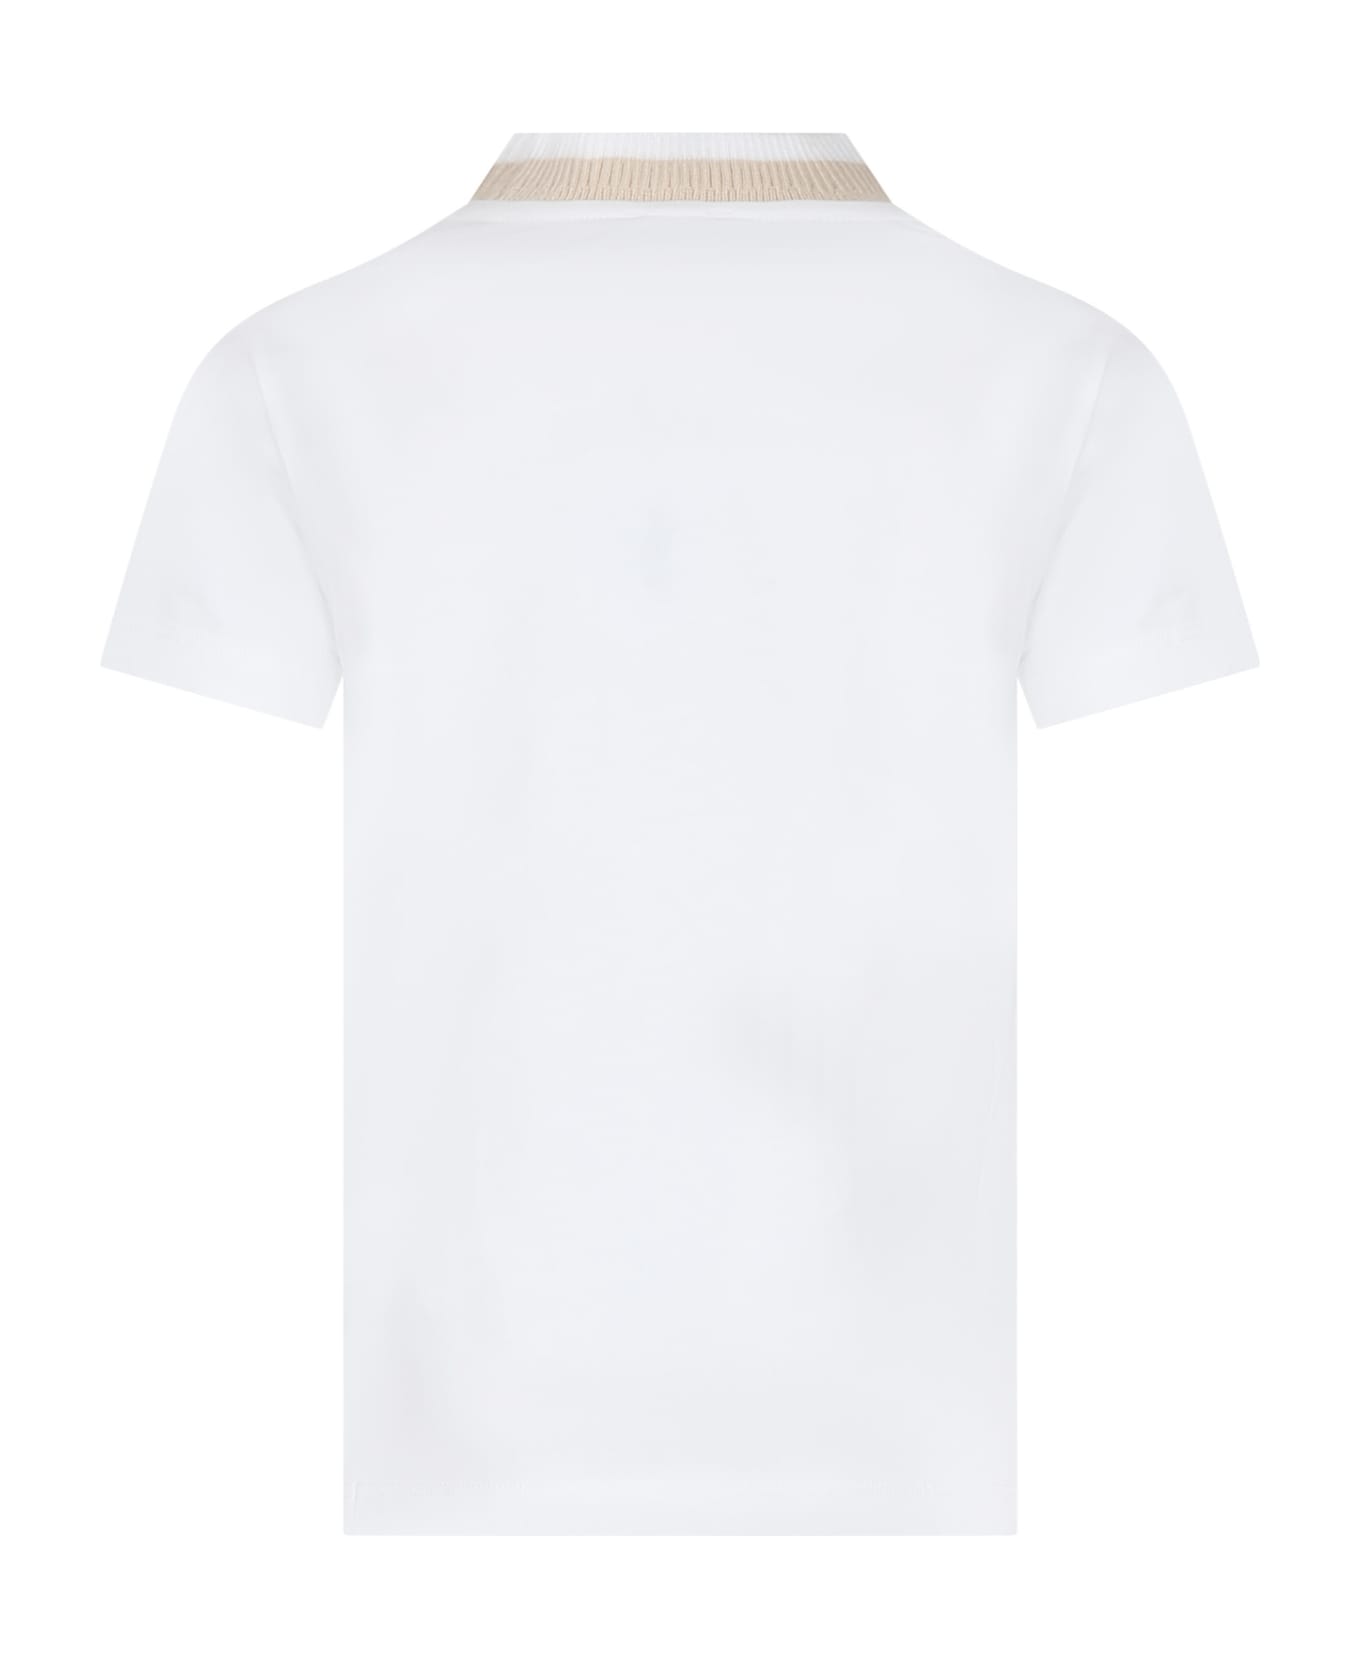 Eleventy White T-shirt For Boy With Logo - White